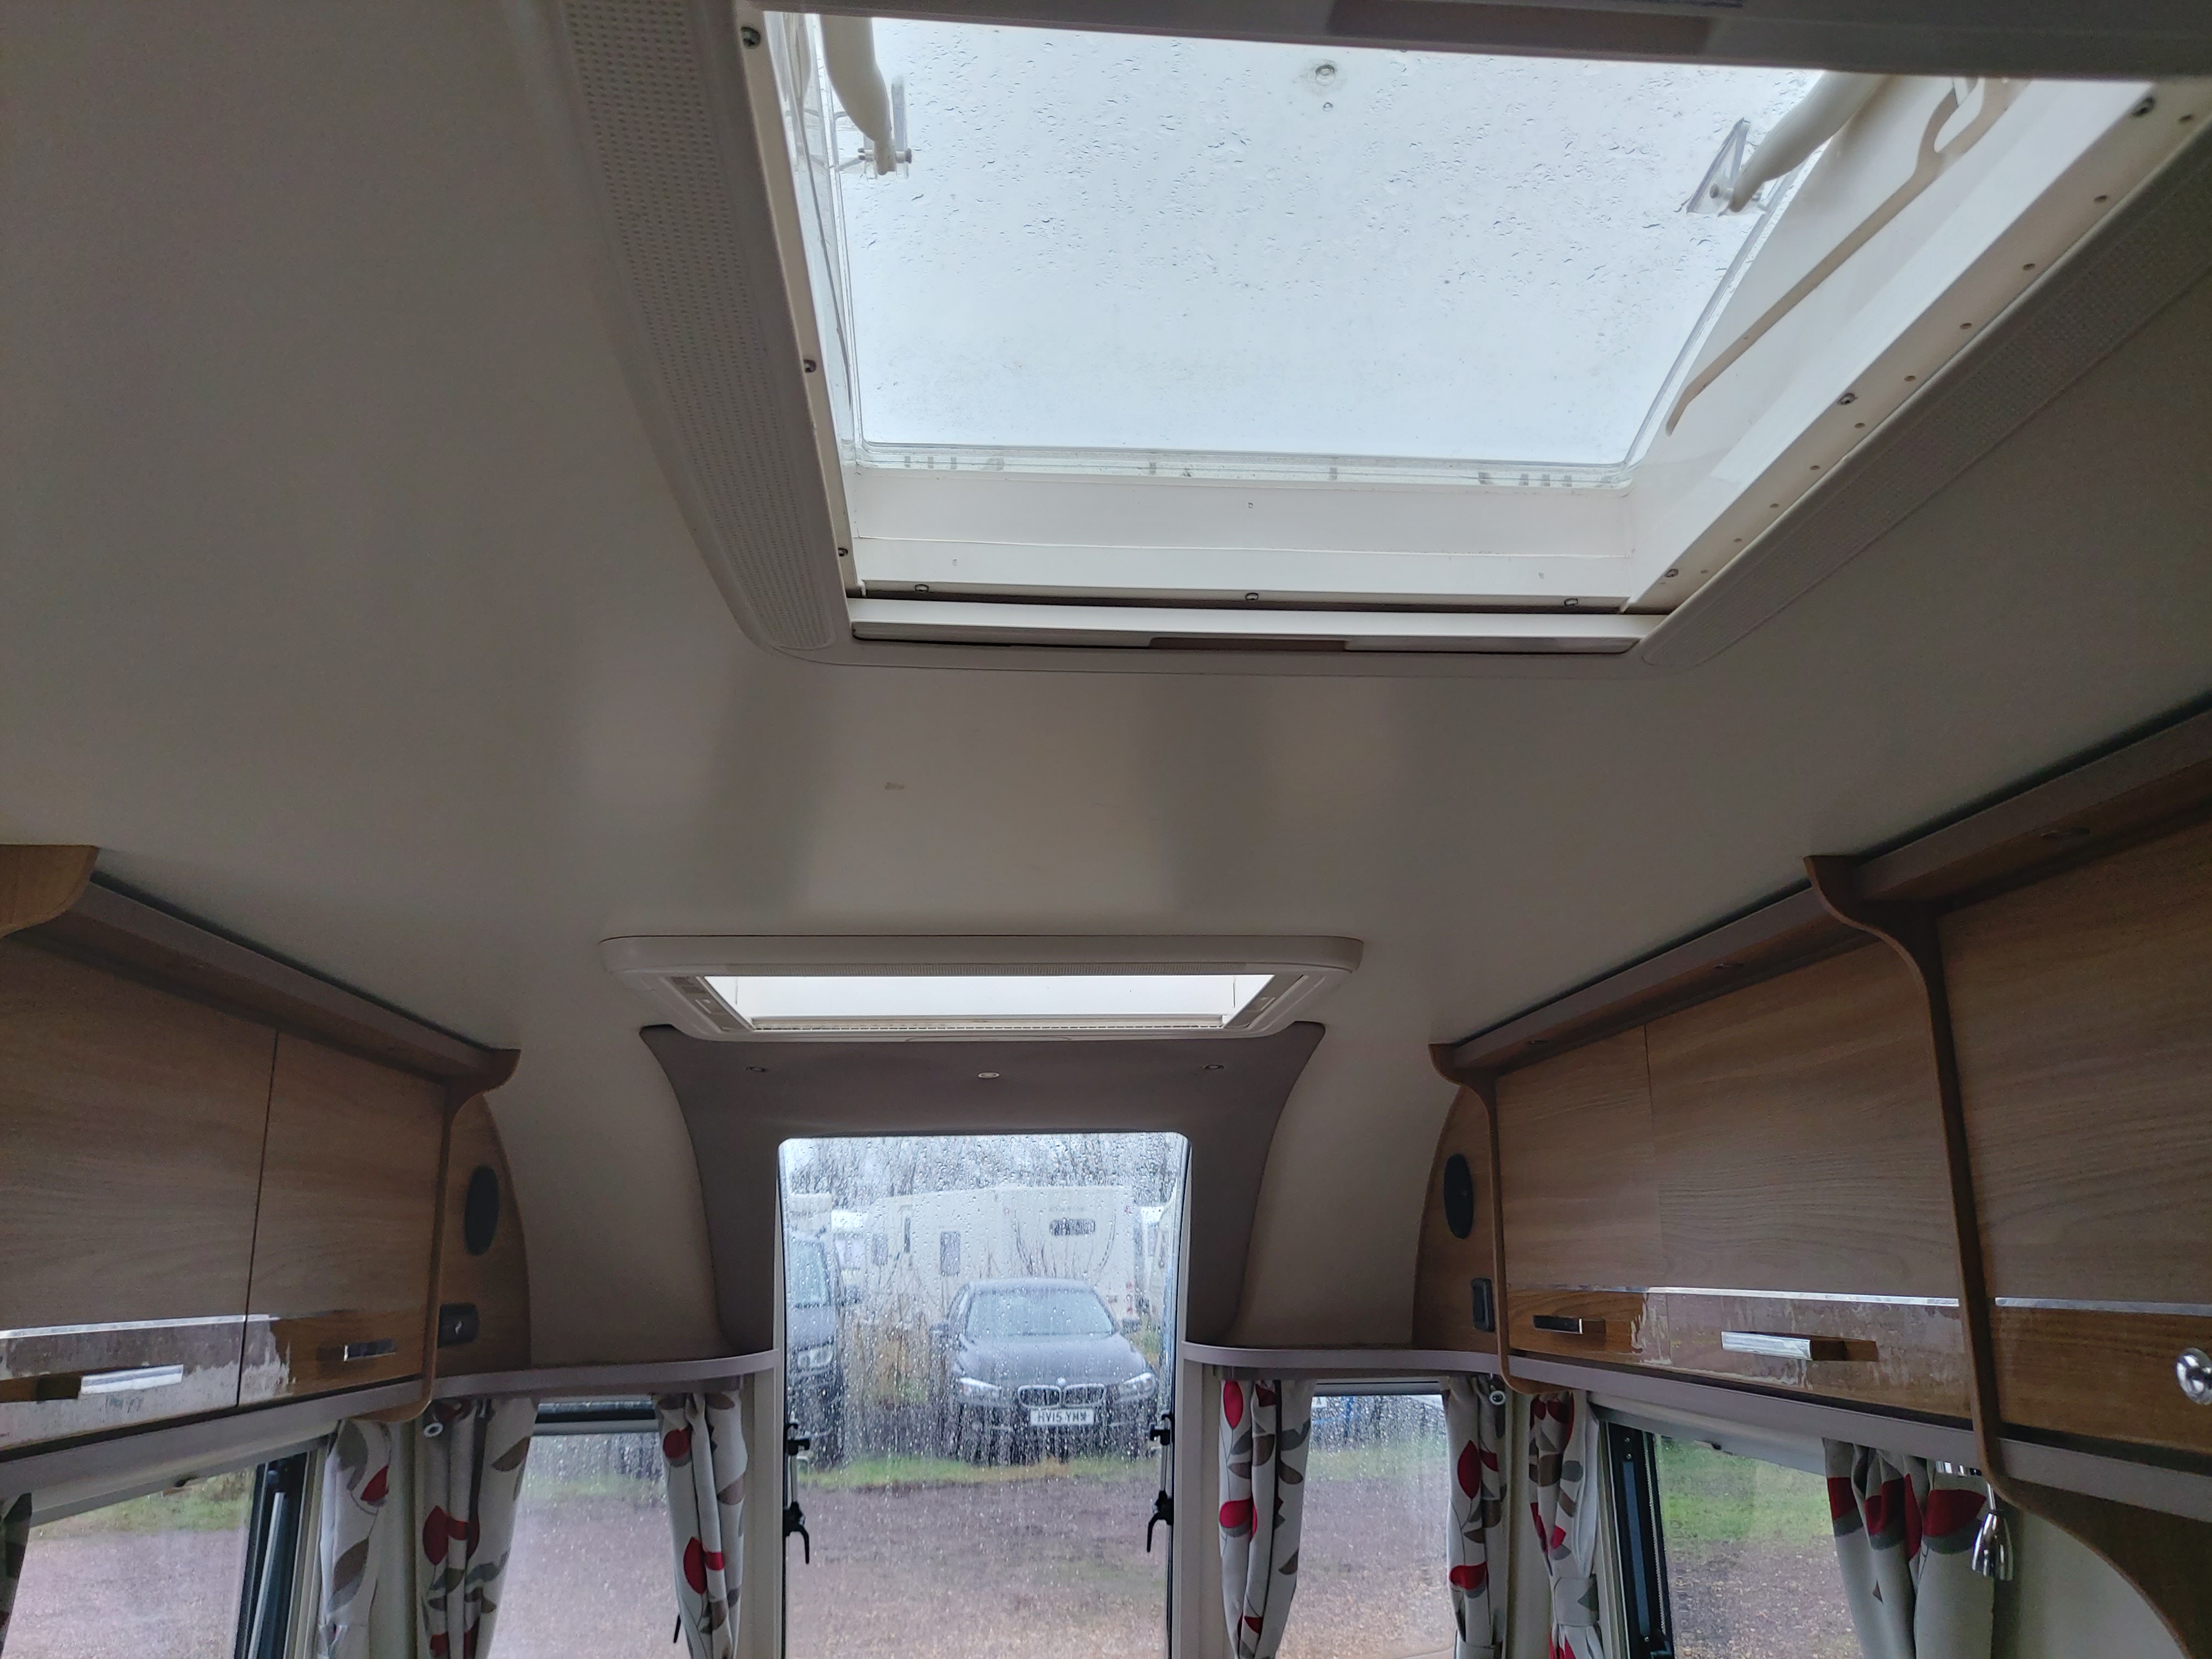 2016 Bailey Pegasus Ancona 5 Berth Fixed Bunks Side Dinette Caravan